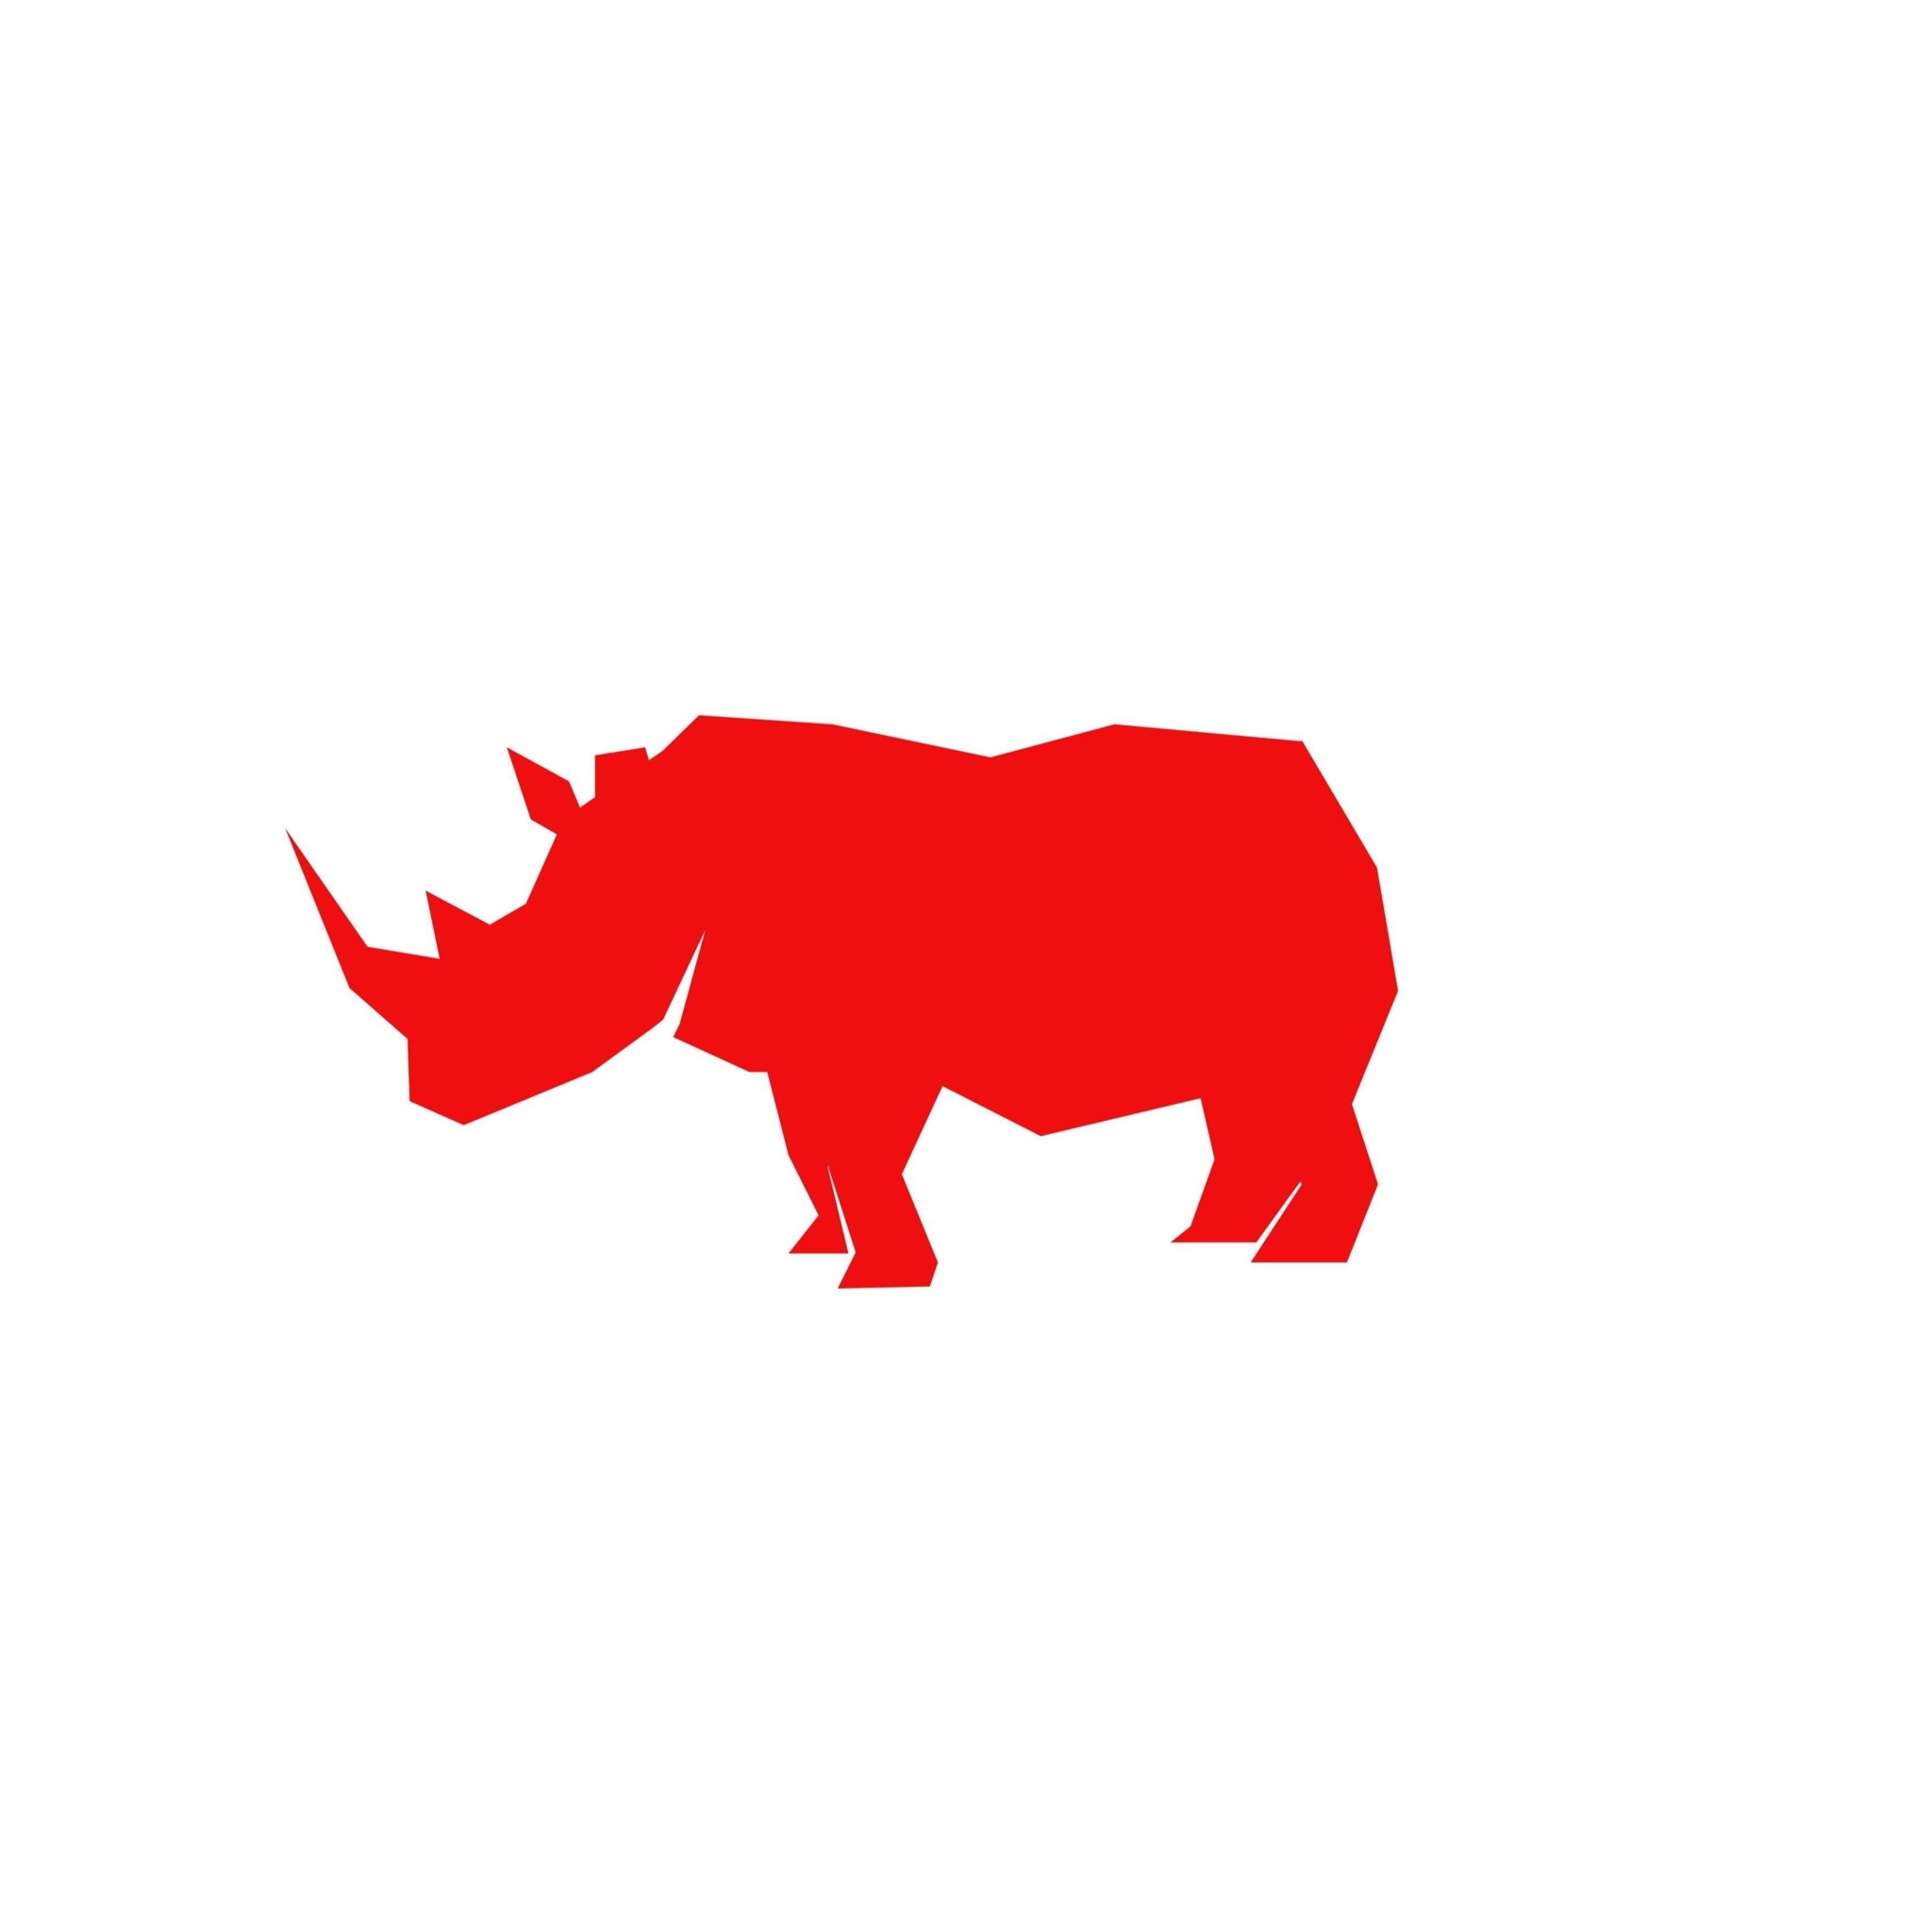 Rhino Shrink Wrap - Fournitures et équipement industriels